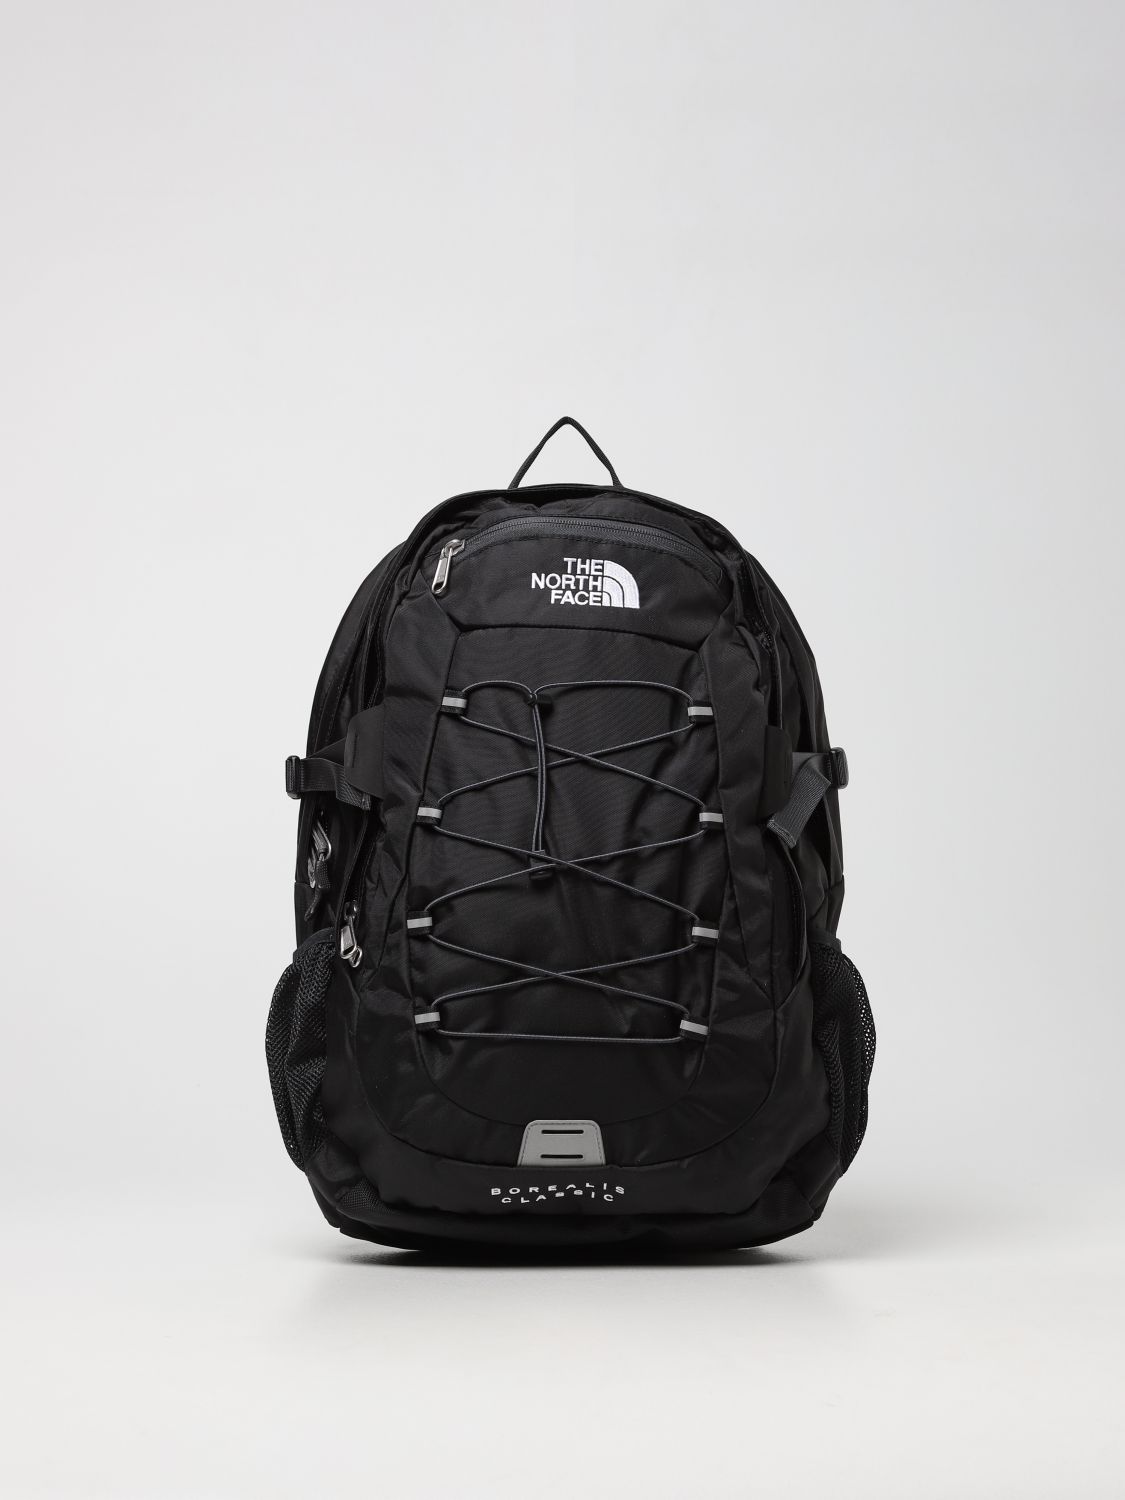 Wantrouwen Artefact straffen THE NORTH FACE: backpack for man - Black | The North Face backpack  NF00CF9CK online on GIGLIO.COM